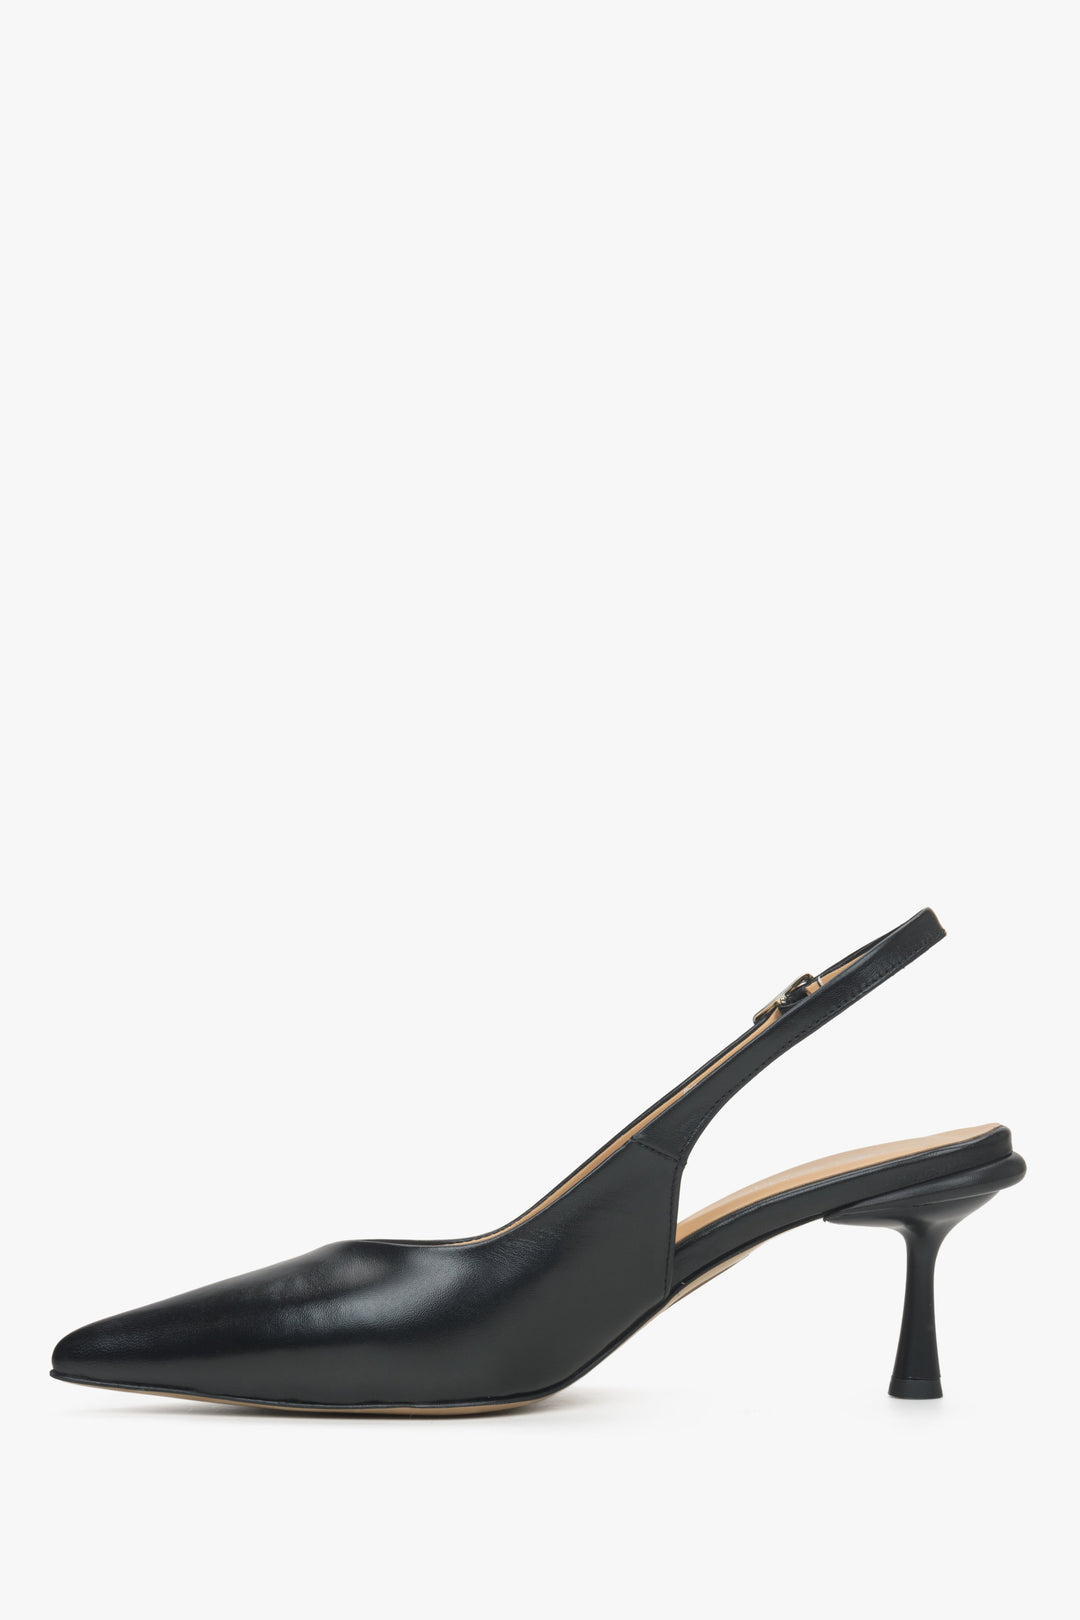 Skórzane czarne buty damskie typu slingback Estro - profil buta.